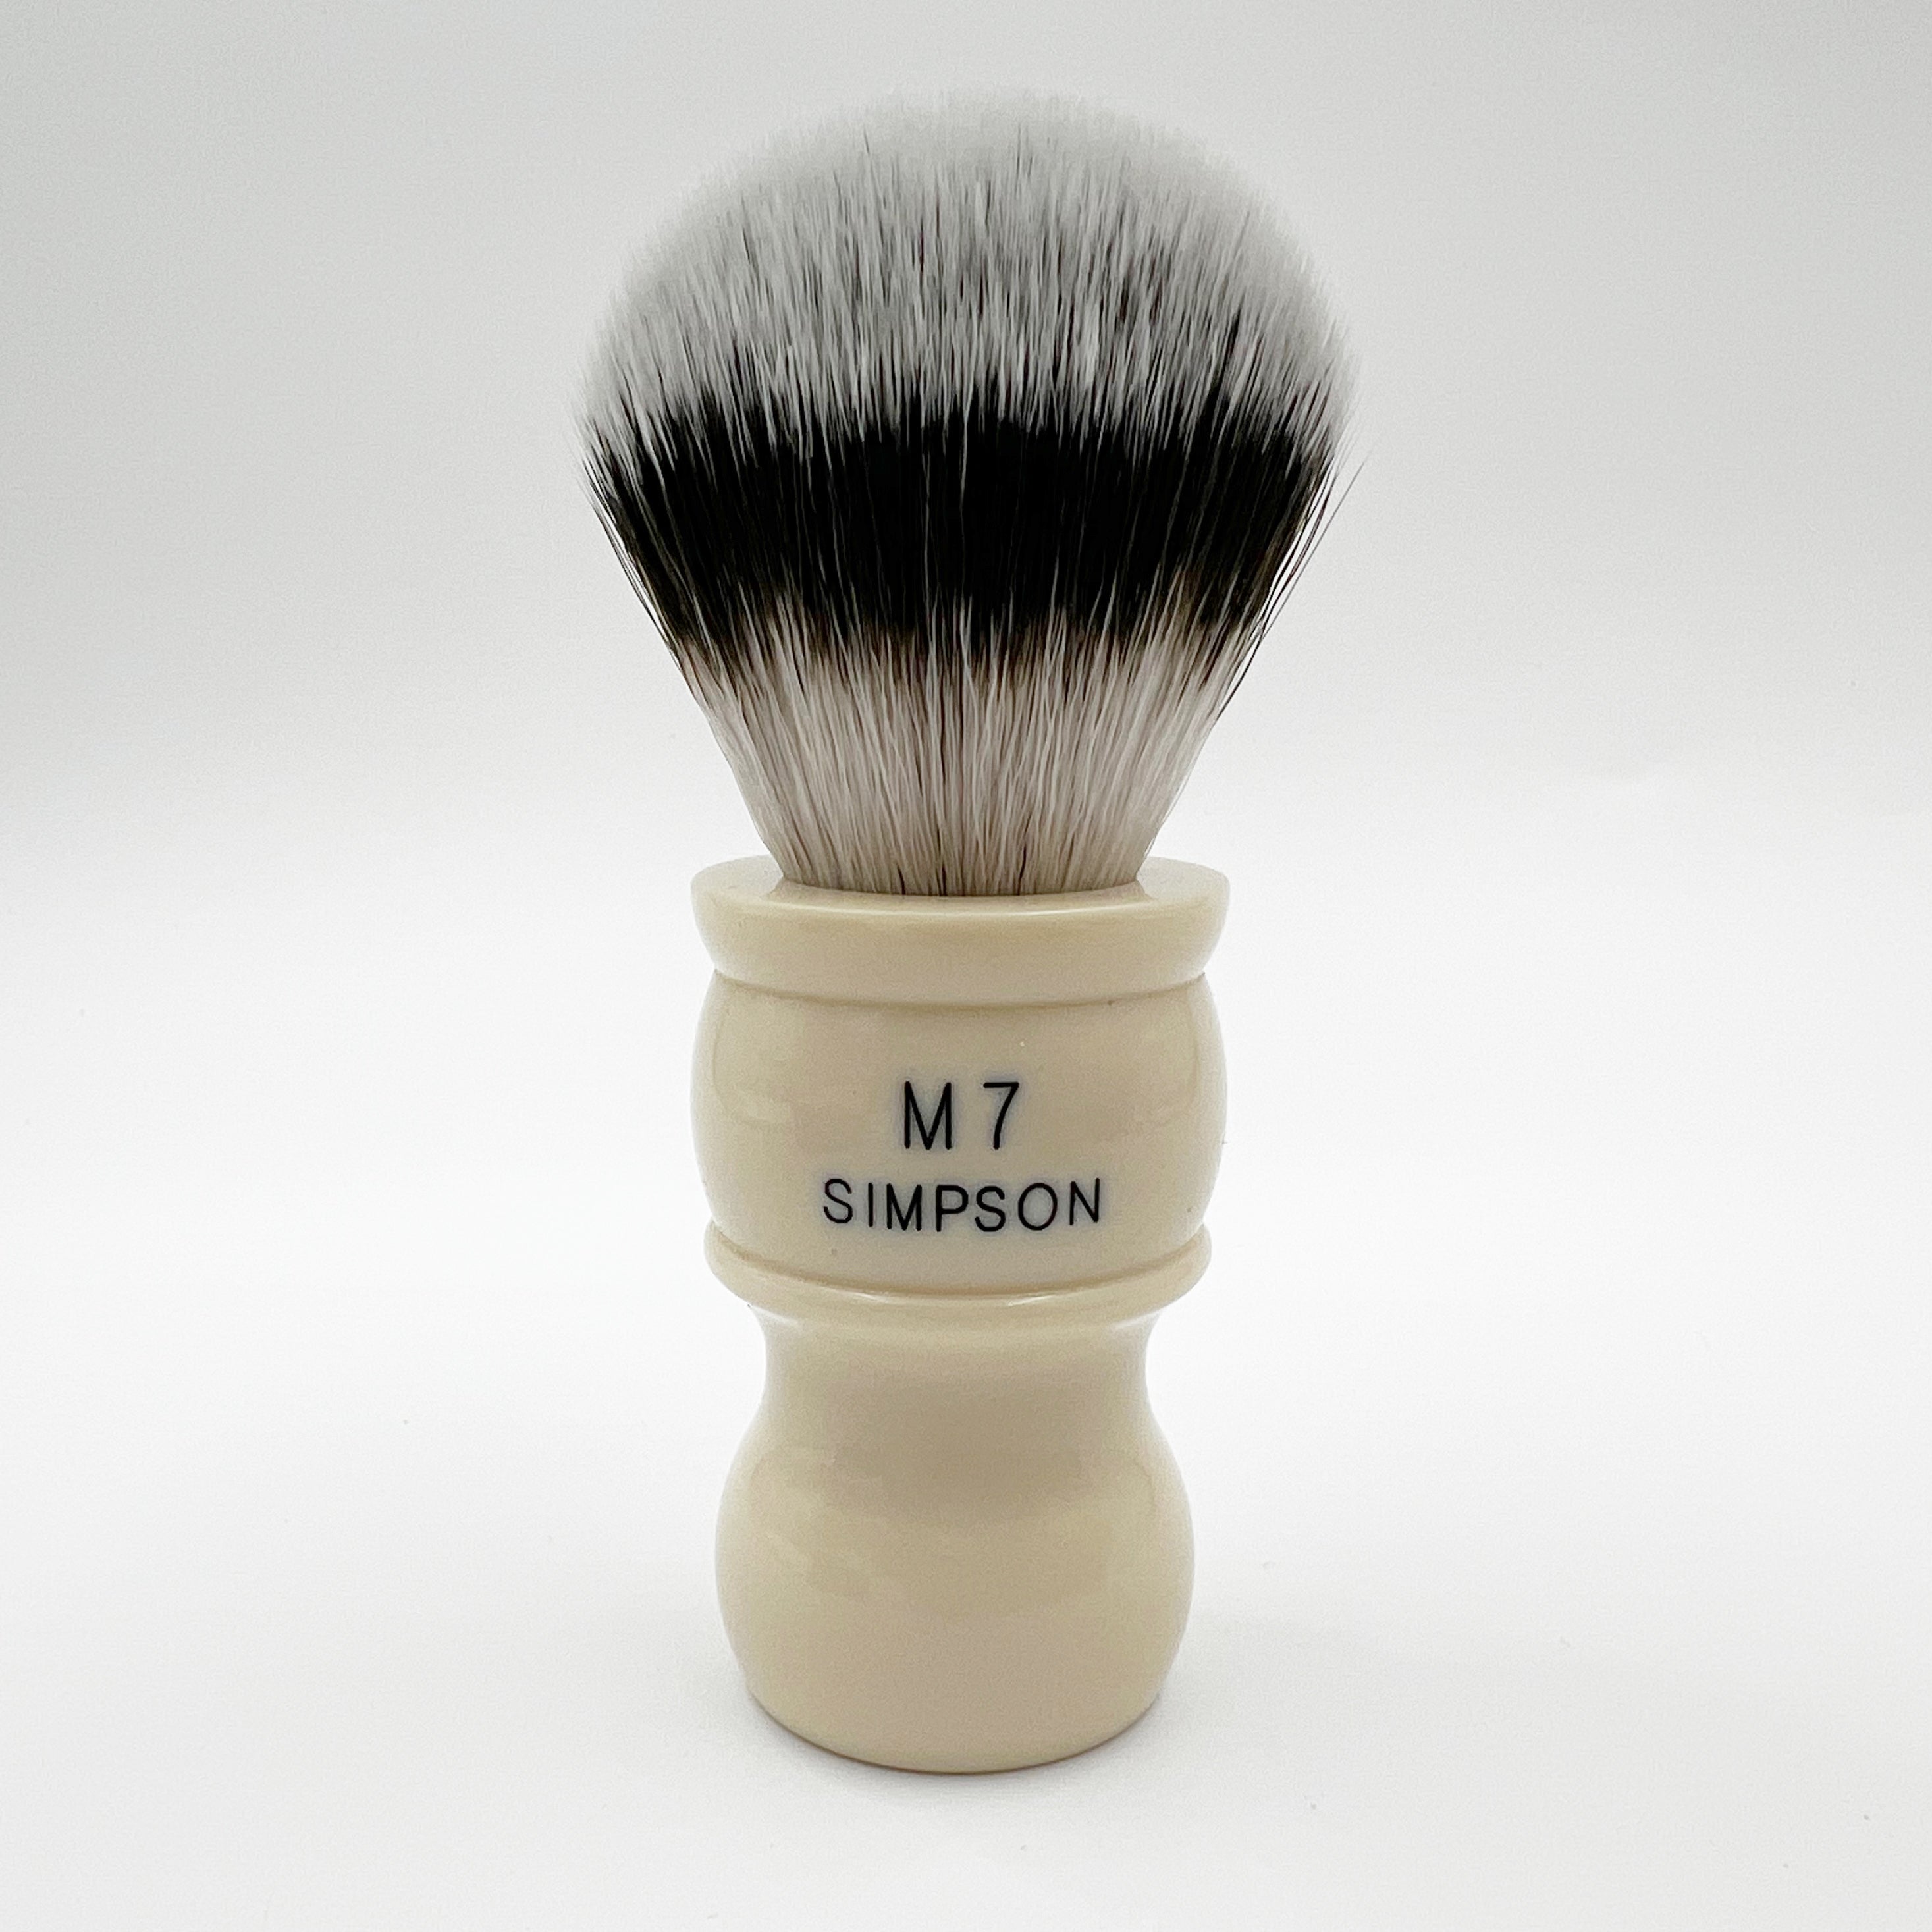 Simpson M7 Sovereign Synthetic Bristle Shaving Brush